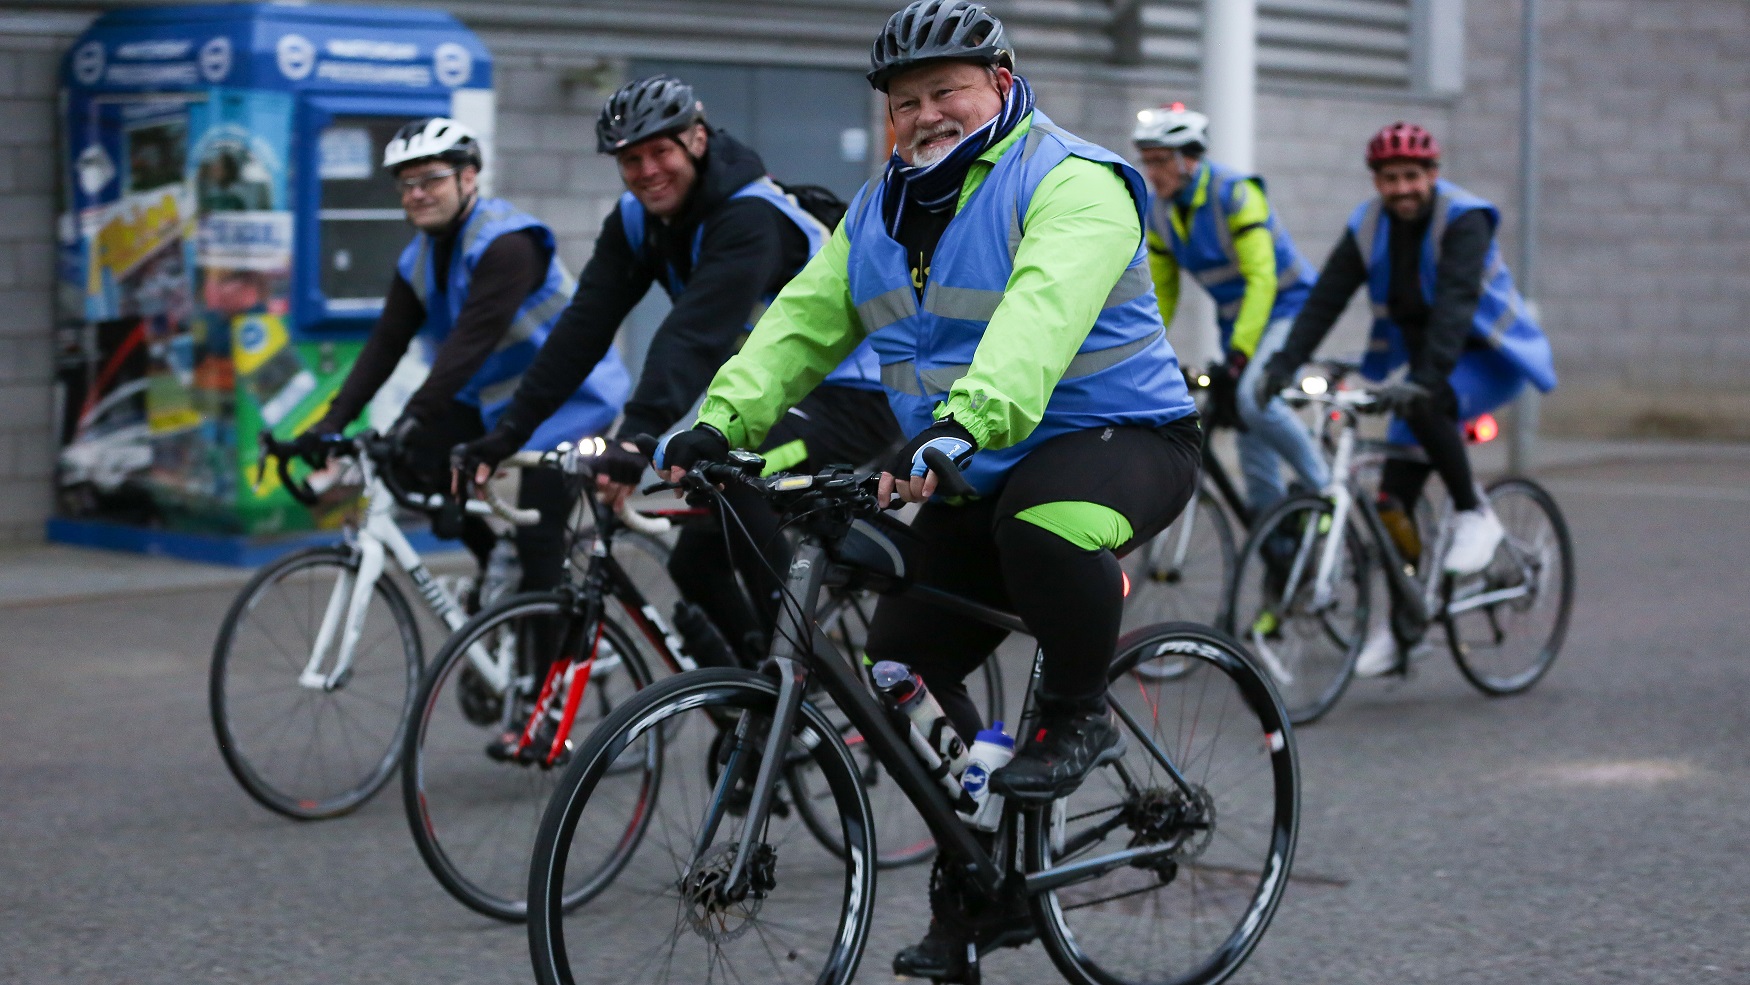 Bike ride raises awareness of testicular cancer